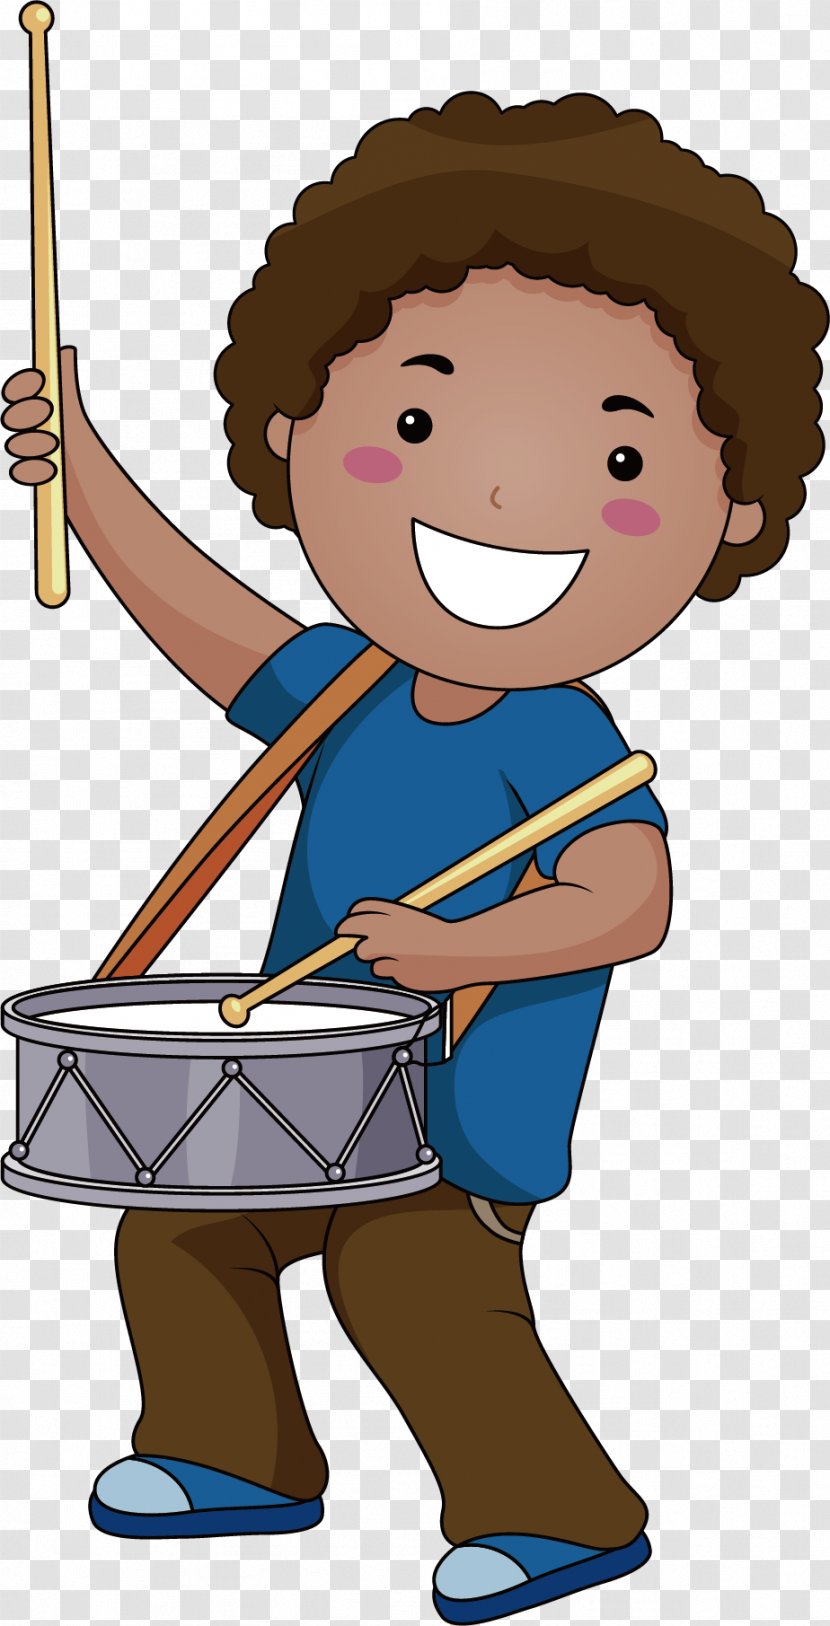 Musical Instrument Drawing Clip Art - Flower - Drum Boy Cartoon Poster Promotional Material Transparent PNG